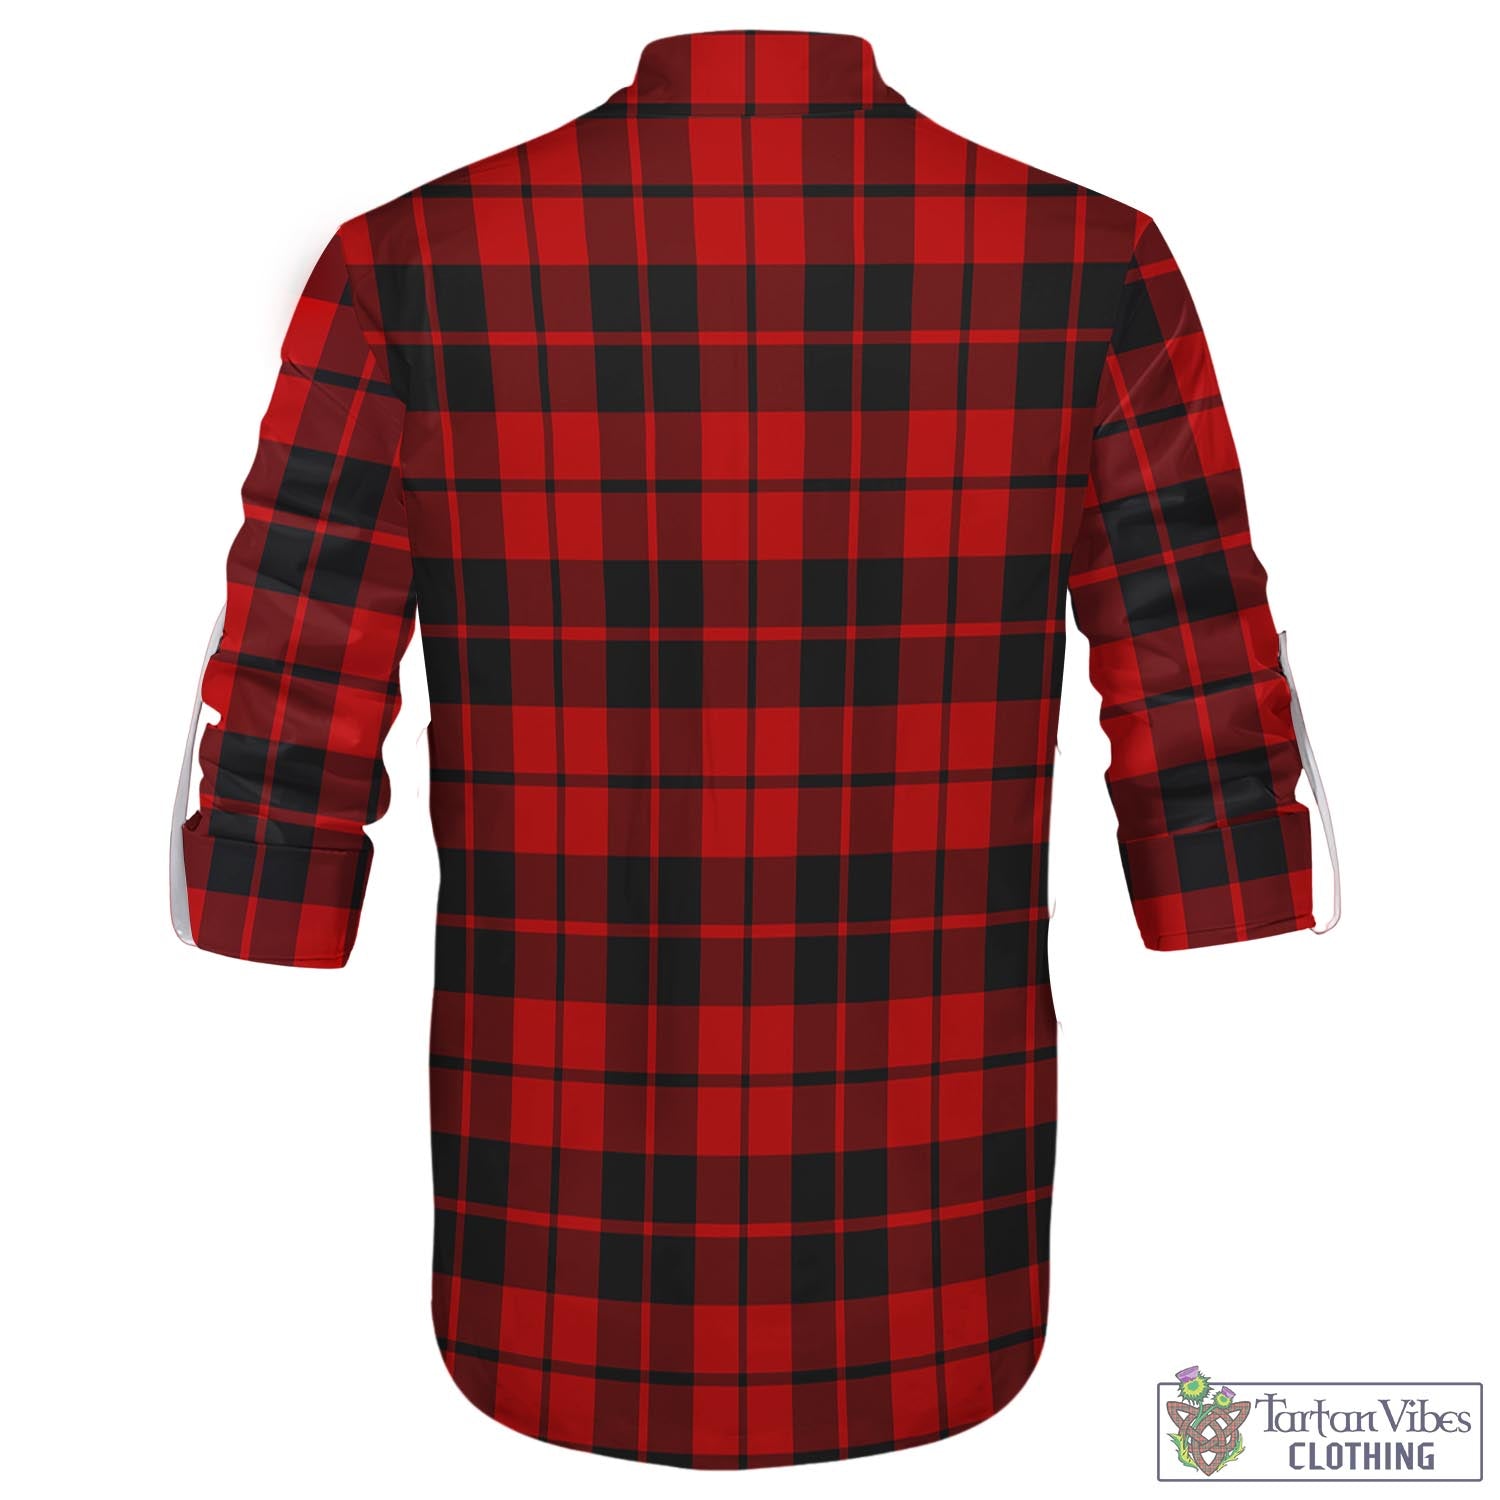 Tartan Vibes Clothing Hogg Tartan Men's Scottish Traditional Jacobite Ghillie Kilt Shirt with Family Crest